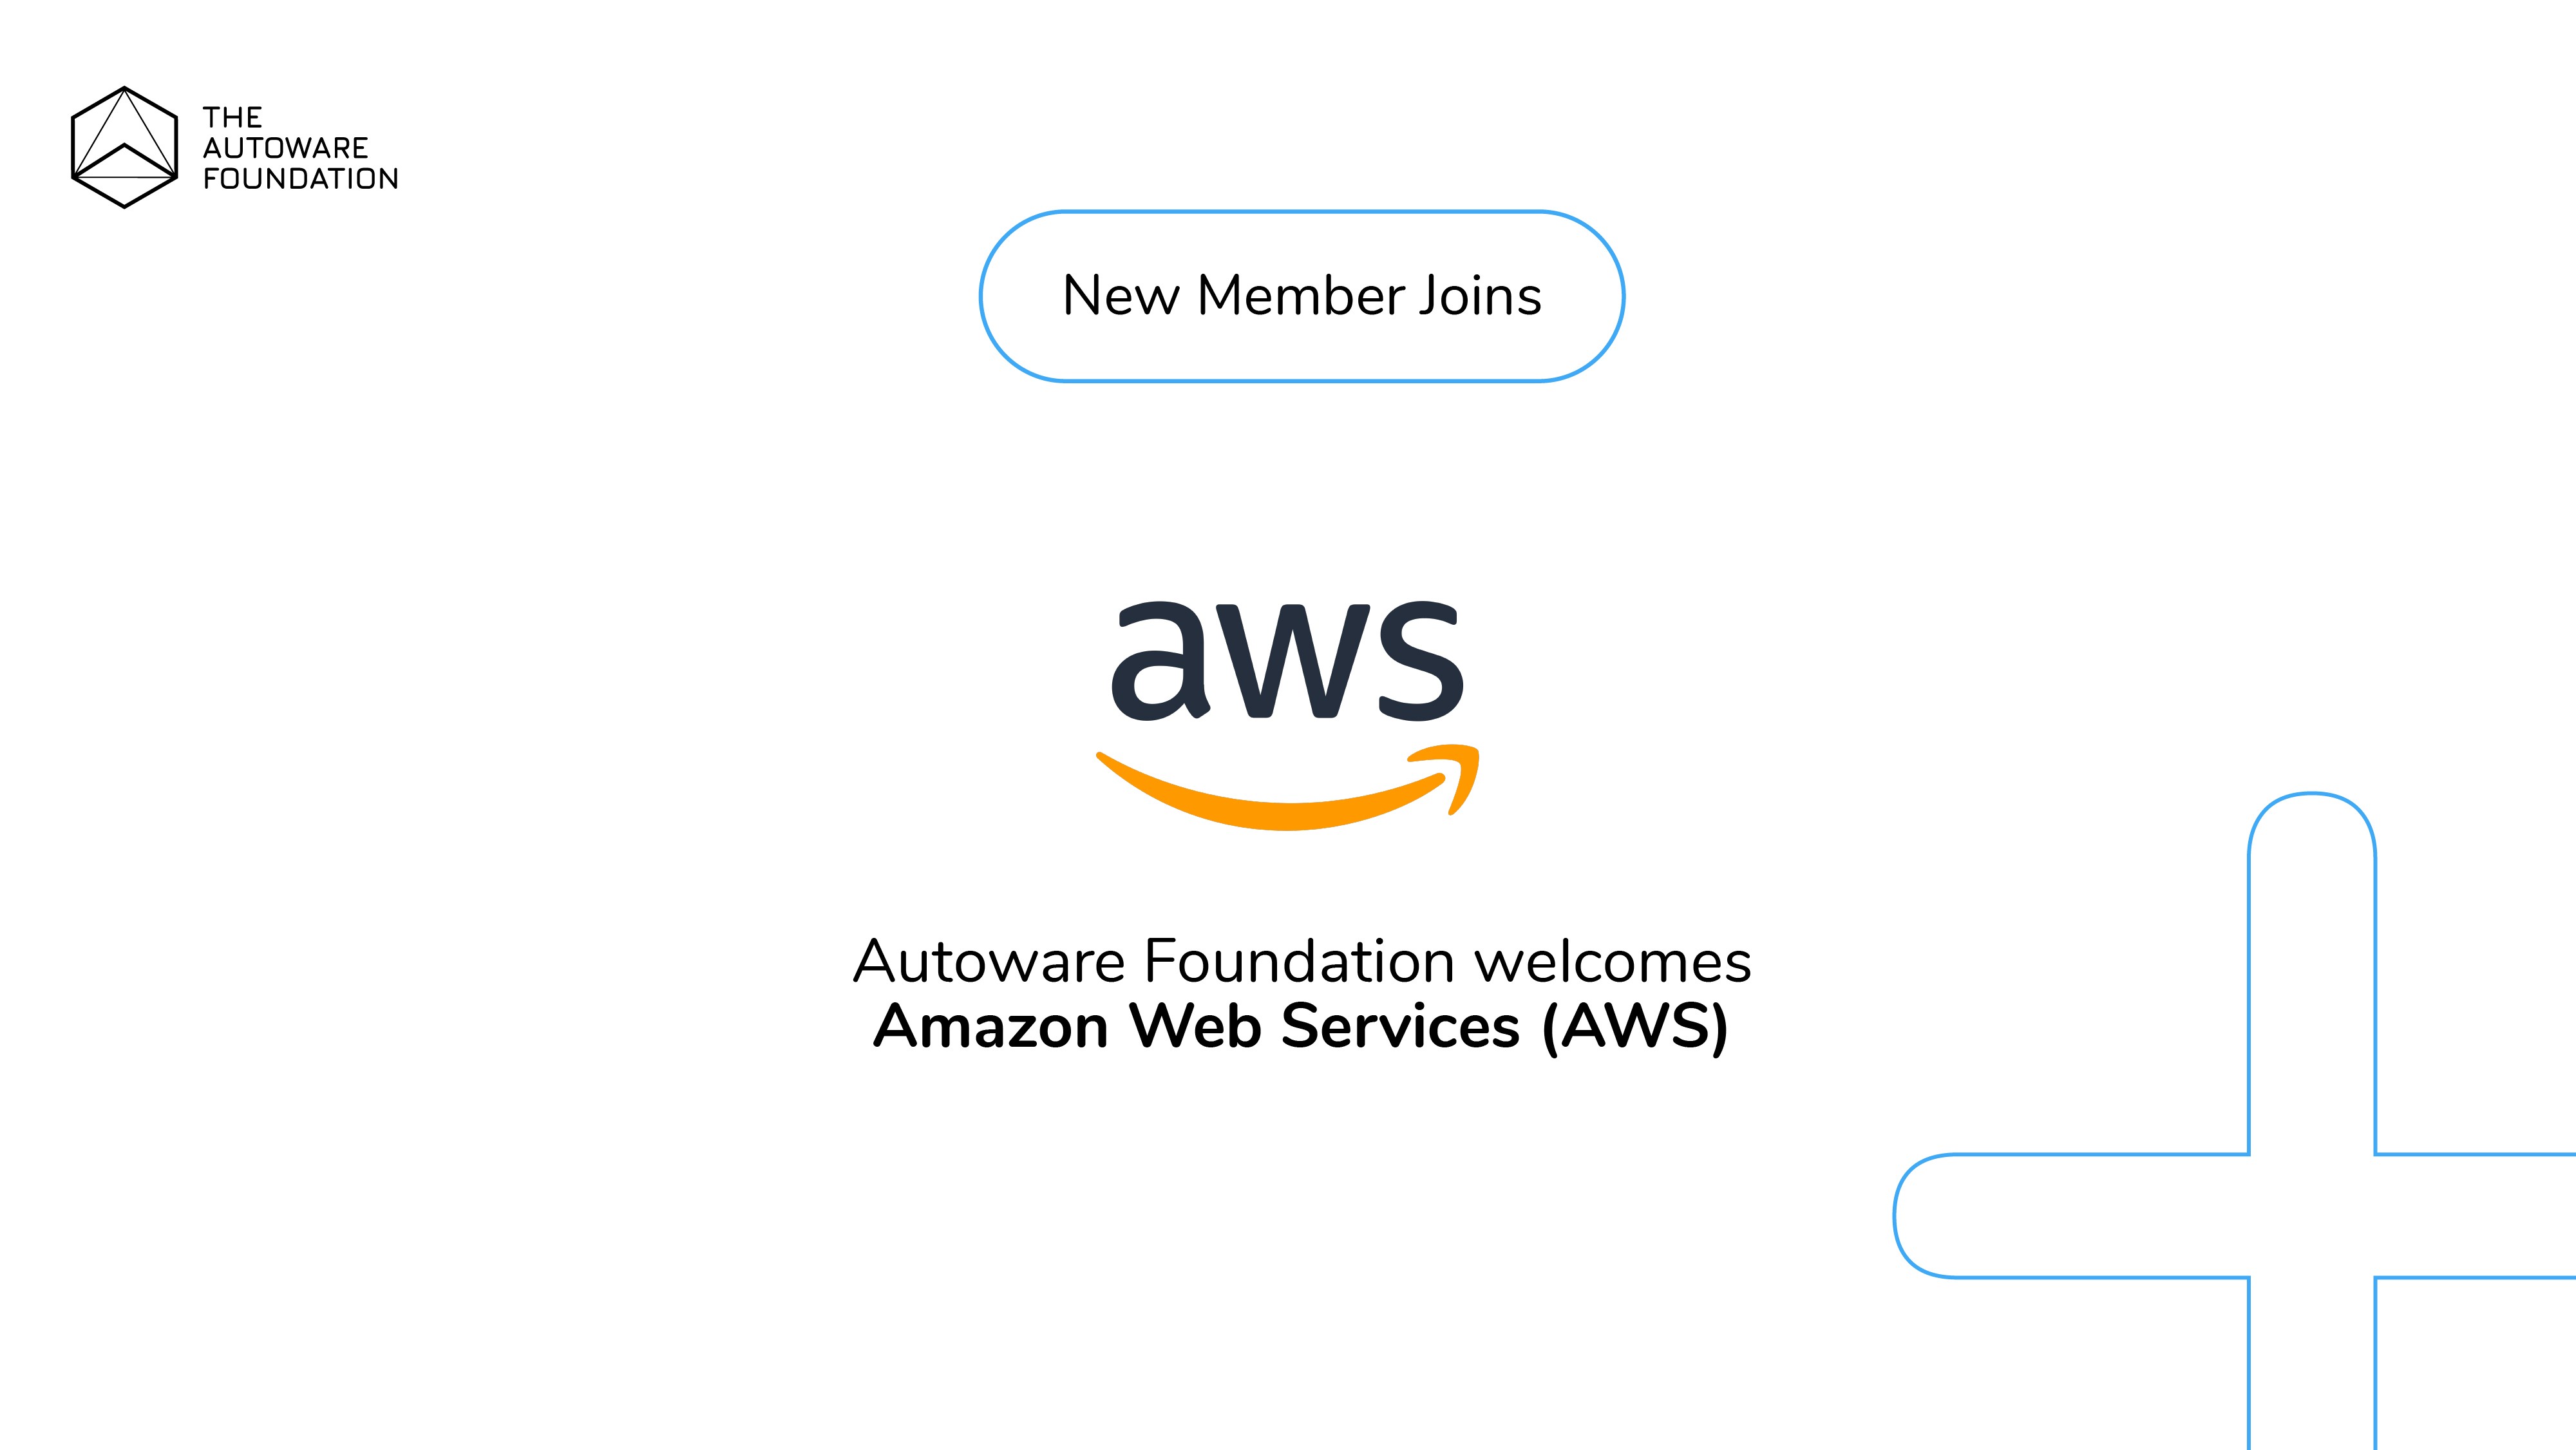 Amazon Web Services (AWS) joins the Autoware Foundation!